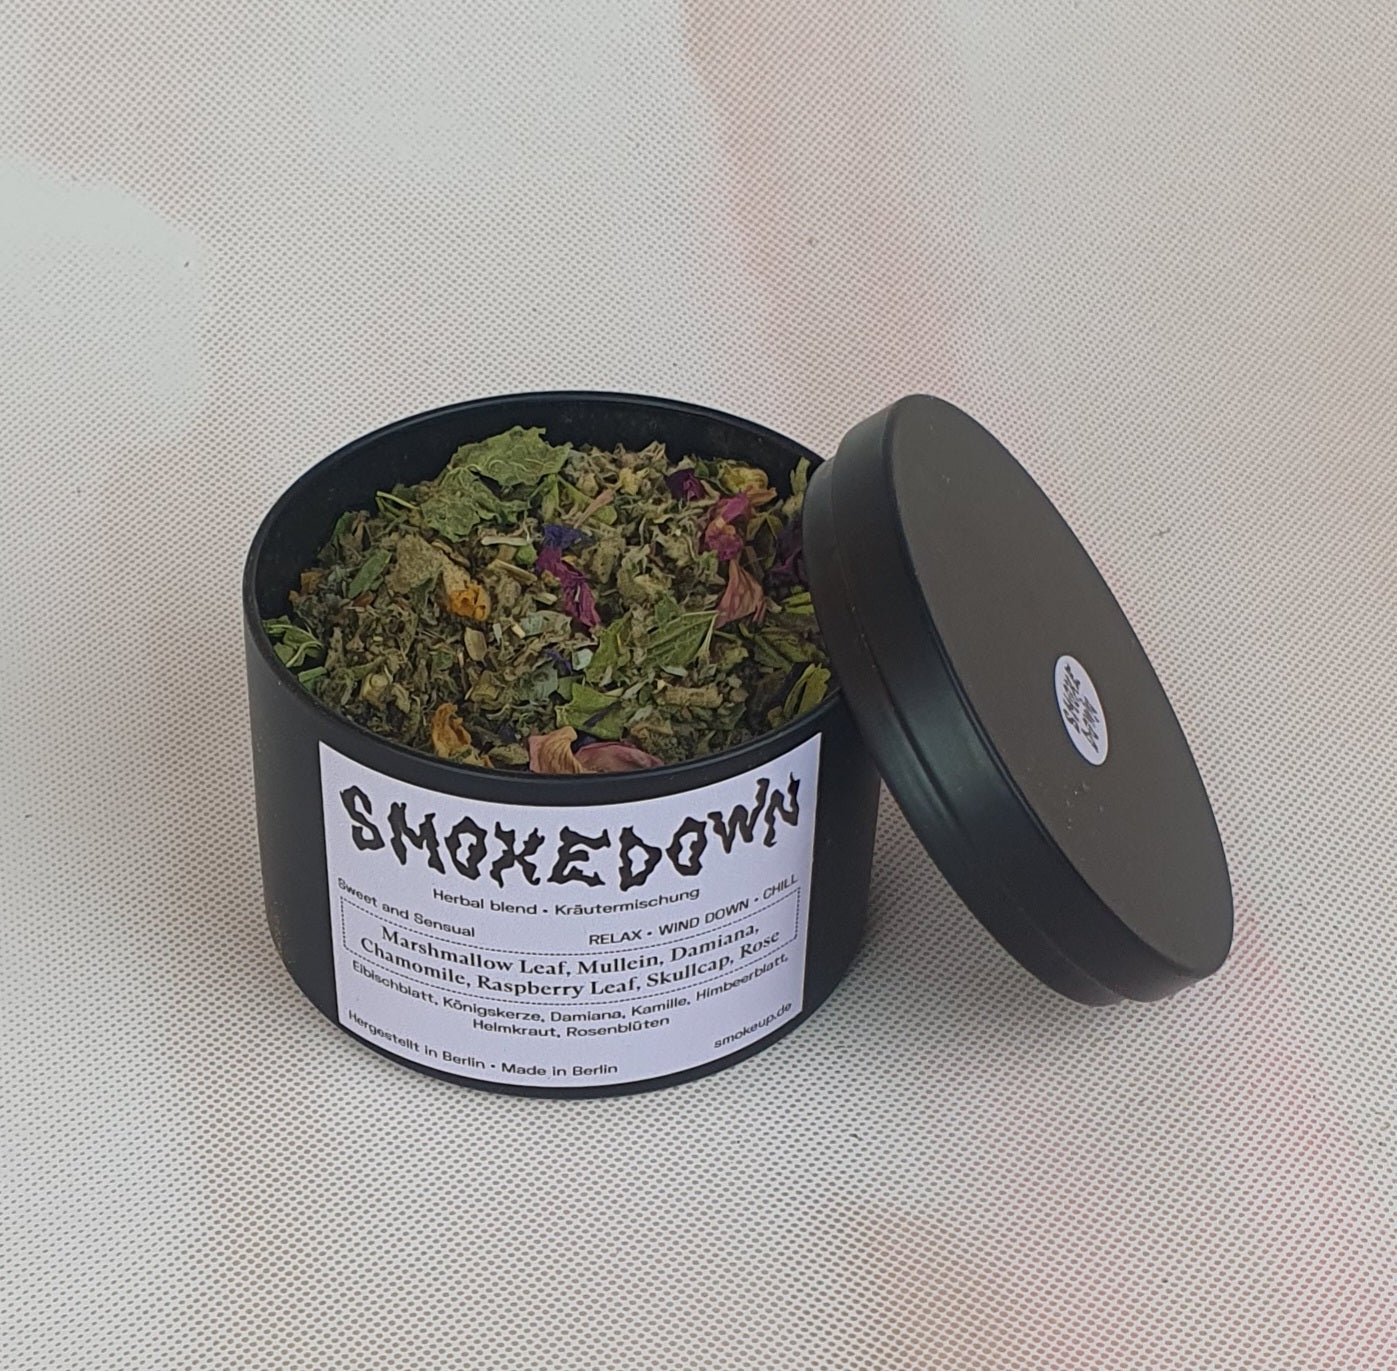 SMOKE DOWN Herbal Blend